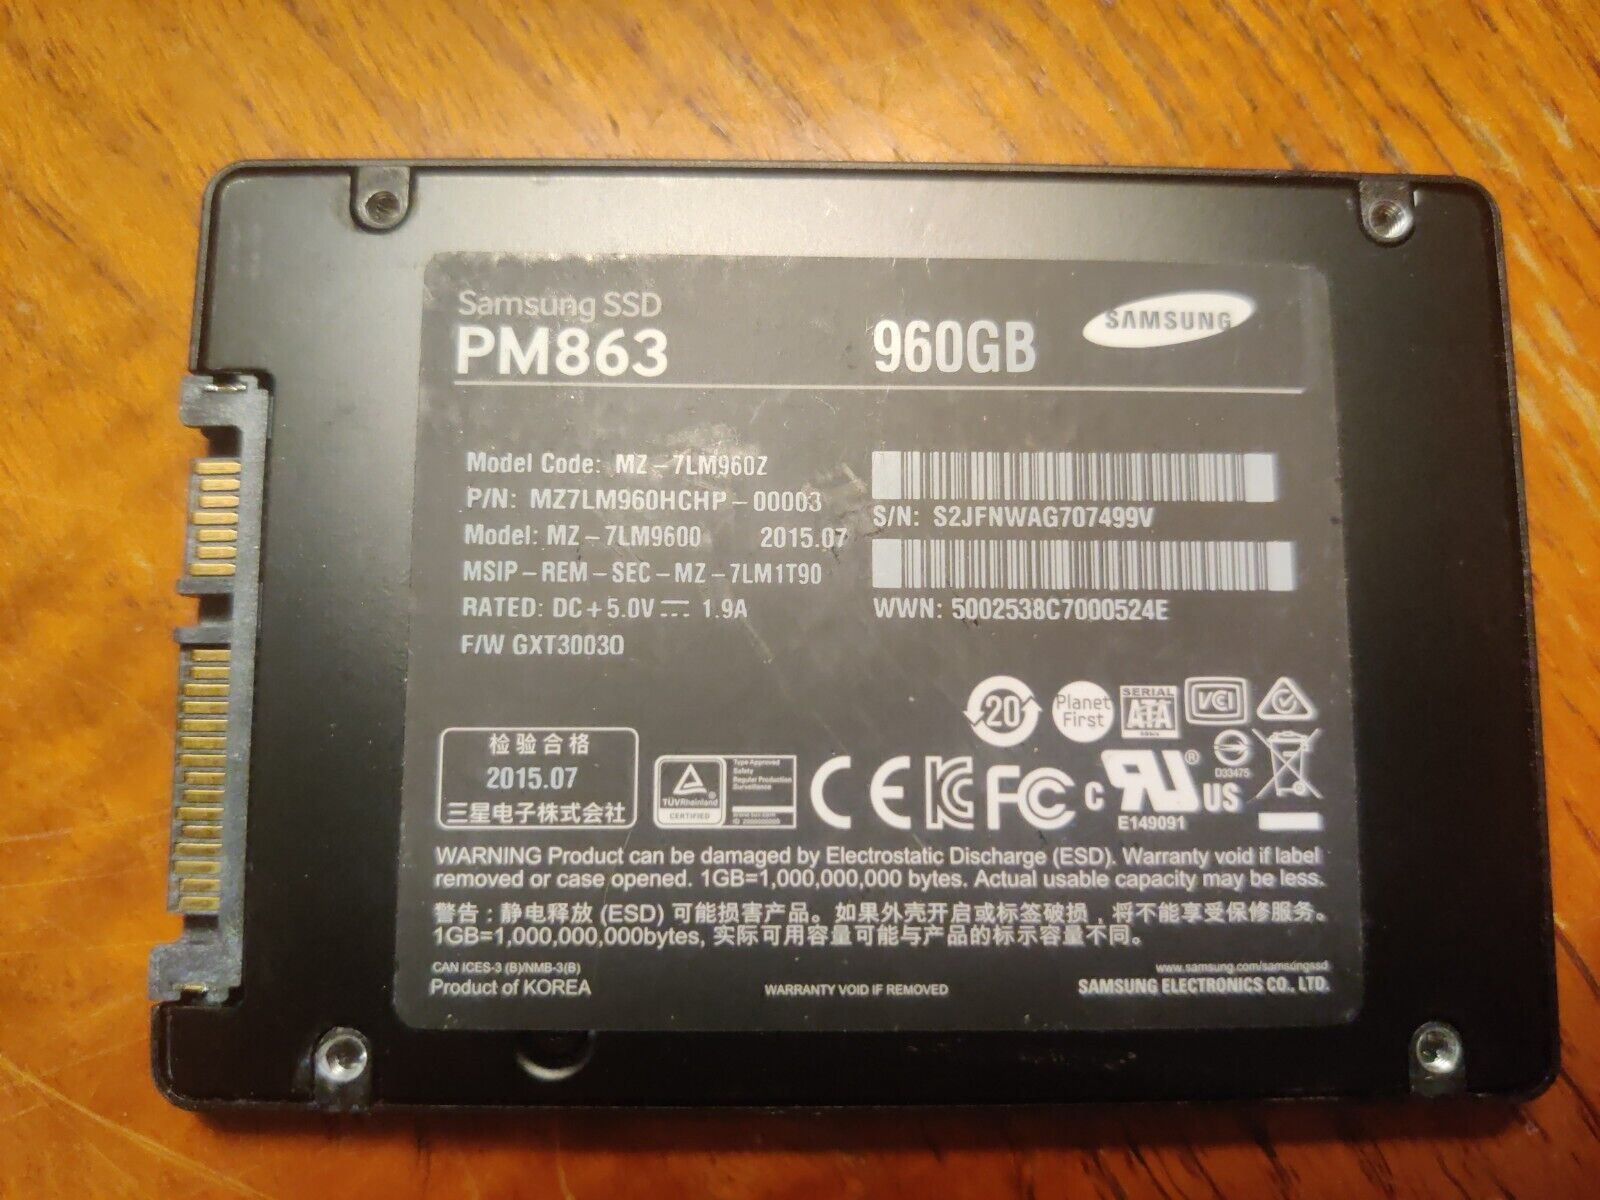 Samsung MZ-7LM960Z 960 GB 2.5 in Internal SSD - MZ7LM960HCHP-00003